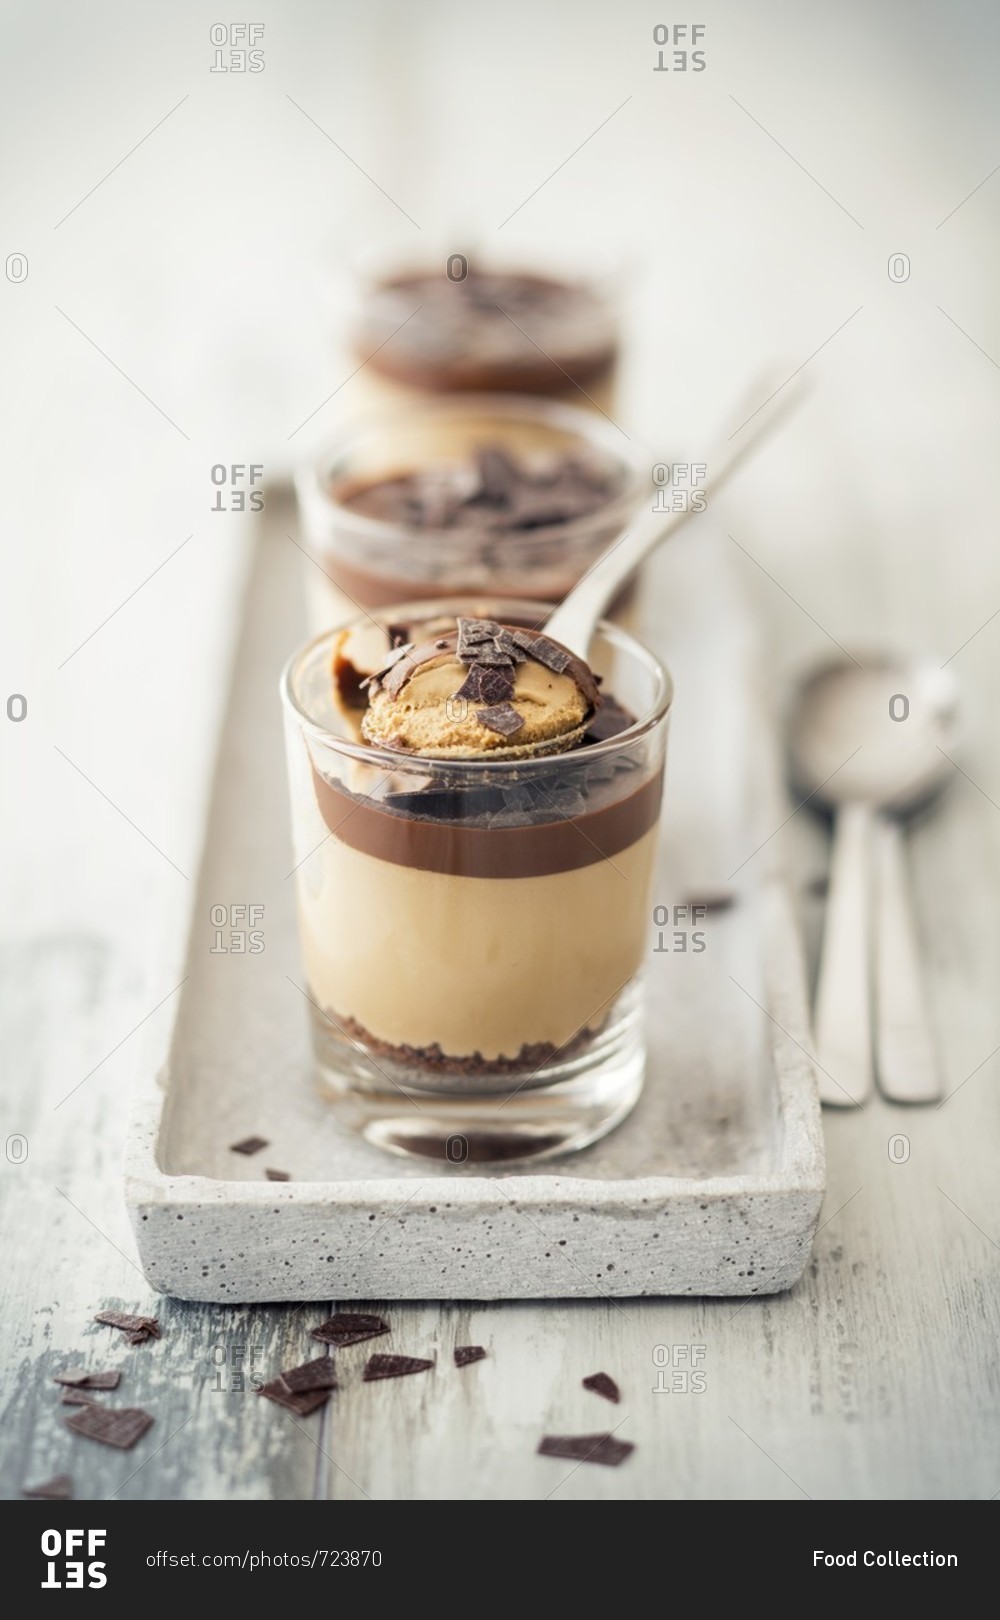 A layered dessert with coffee cream